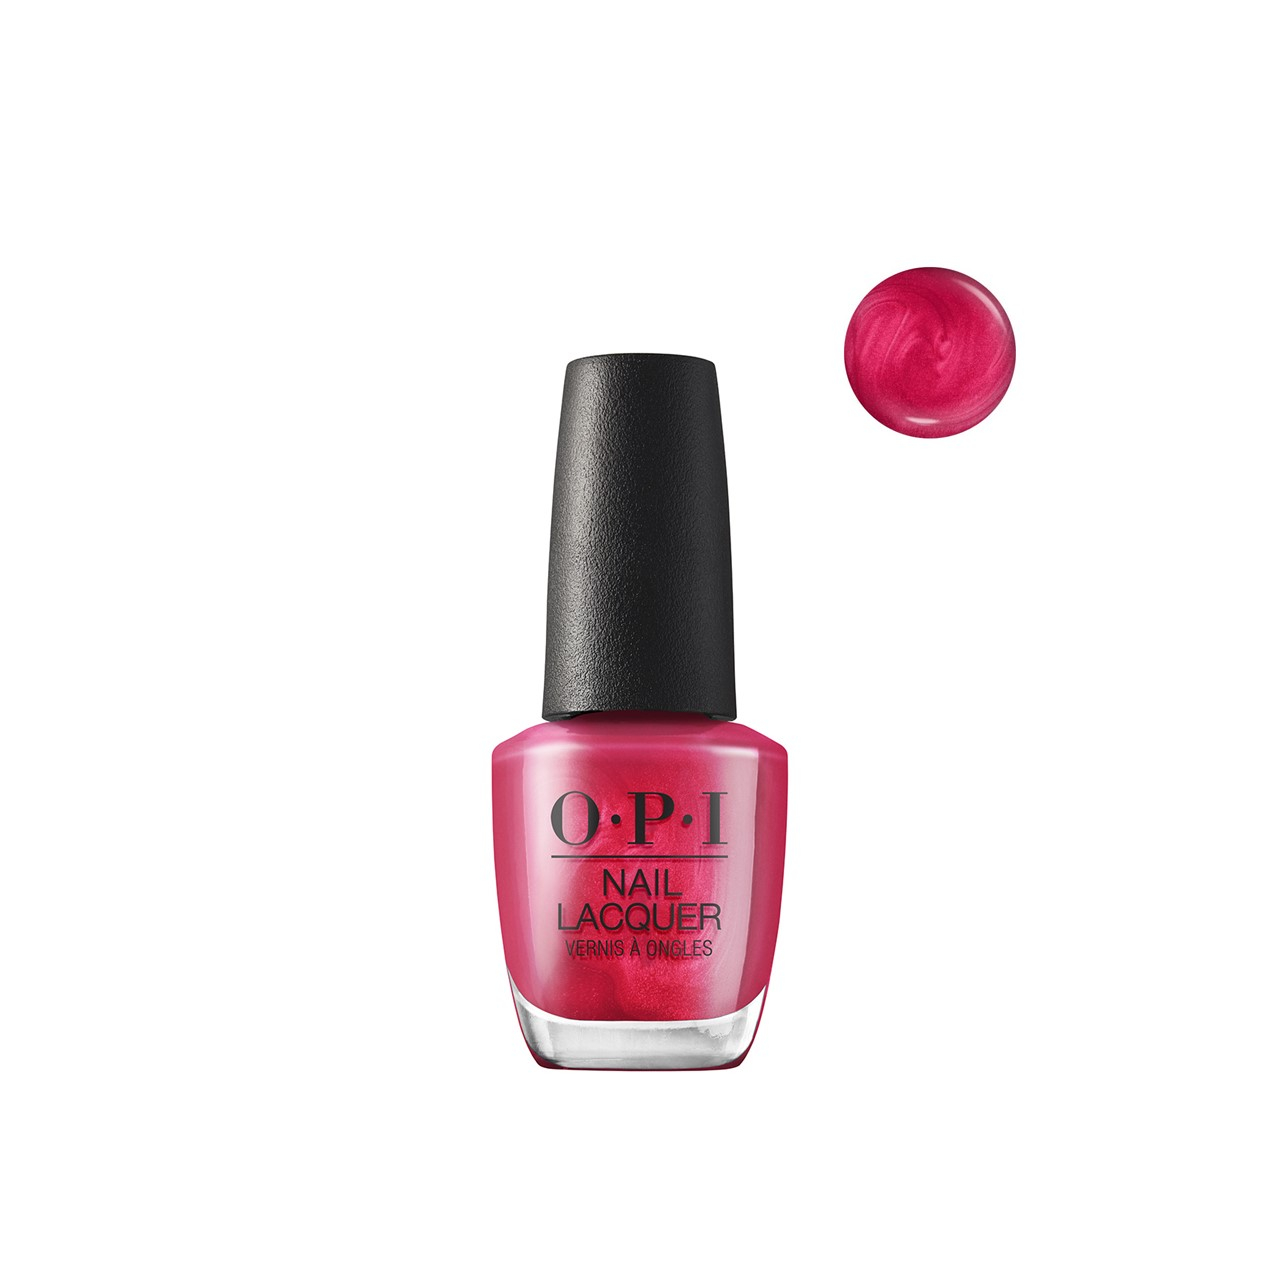 OPI Nail Polish – Charged Up Cherry – NLB35 – Pink Creme